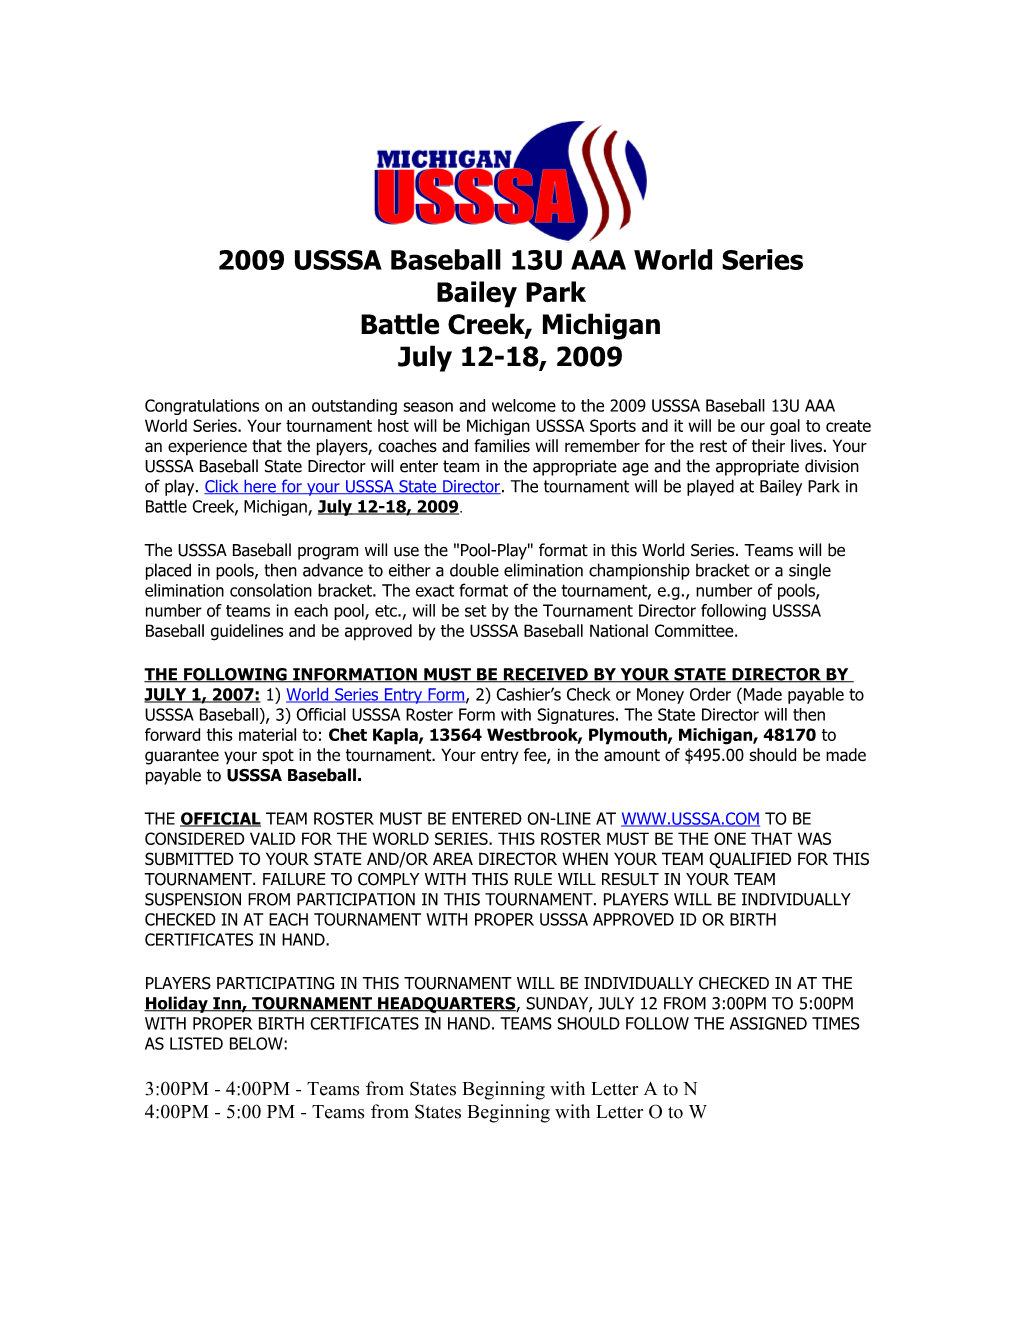 2006 USSSA Baseball 10 12 - 14 AA World Series